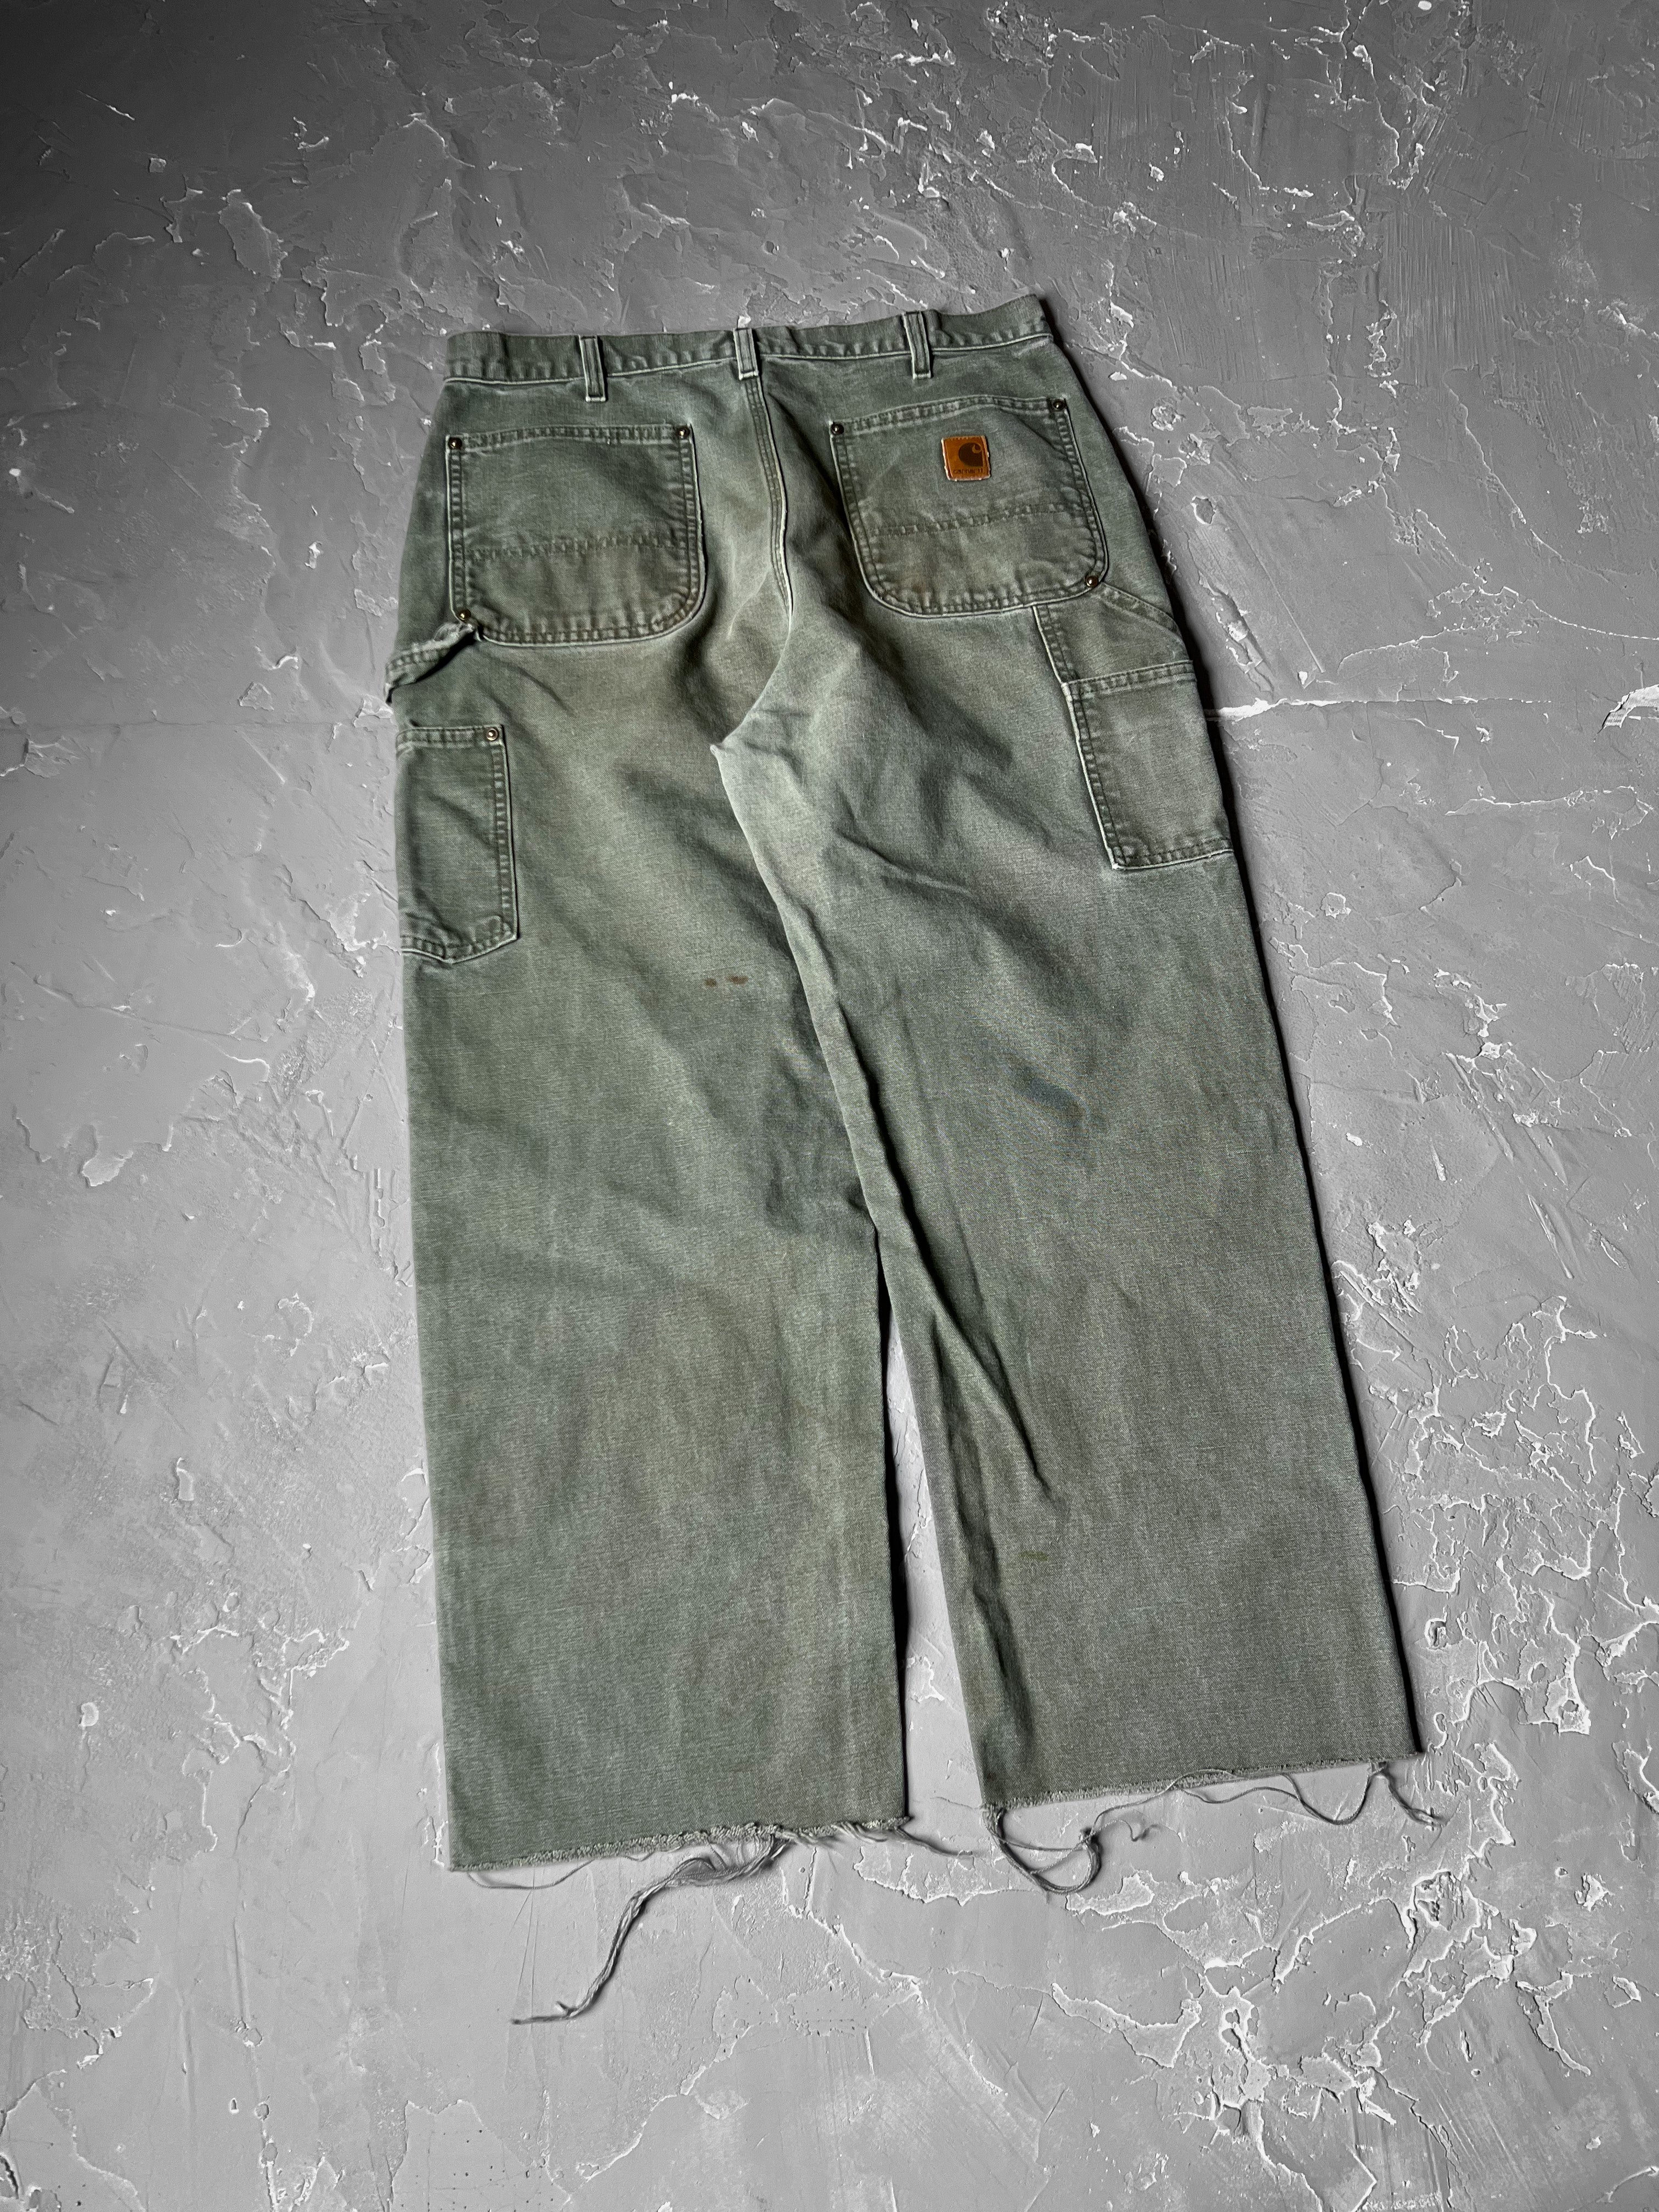 Carhartt Faded Green Double Knee Pants [34 x 30]